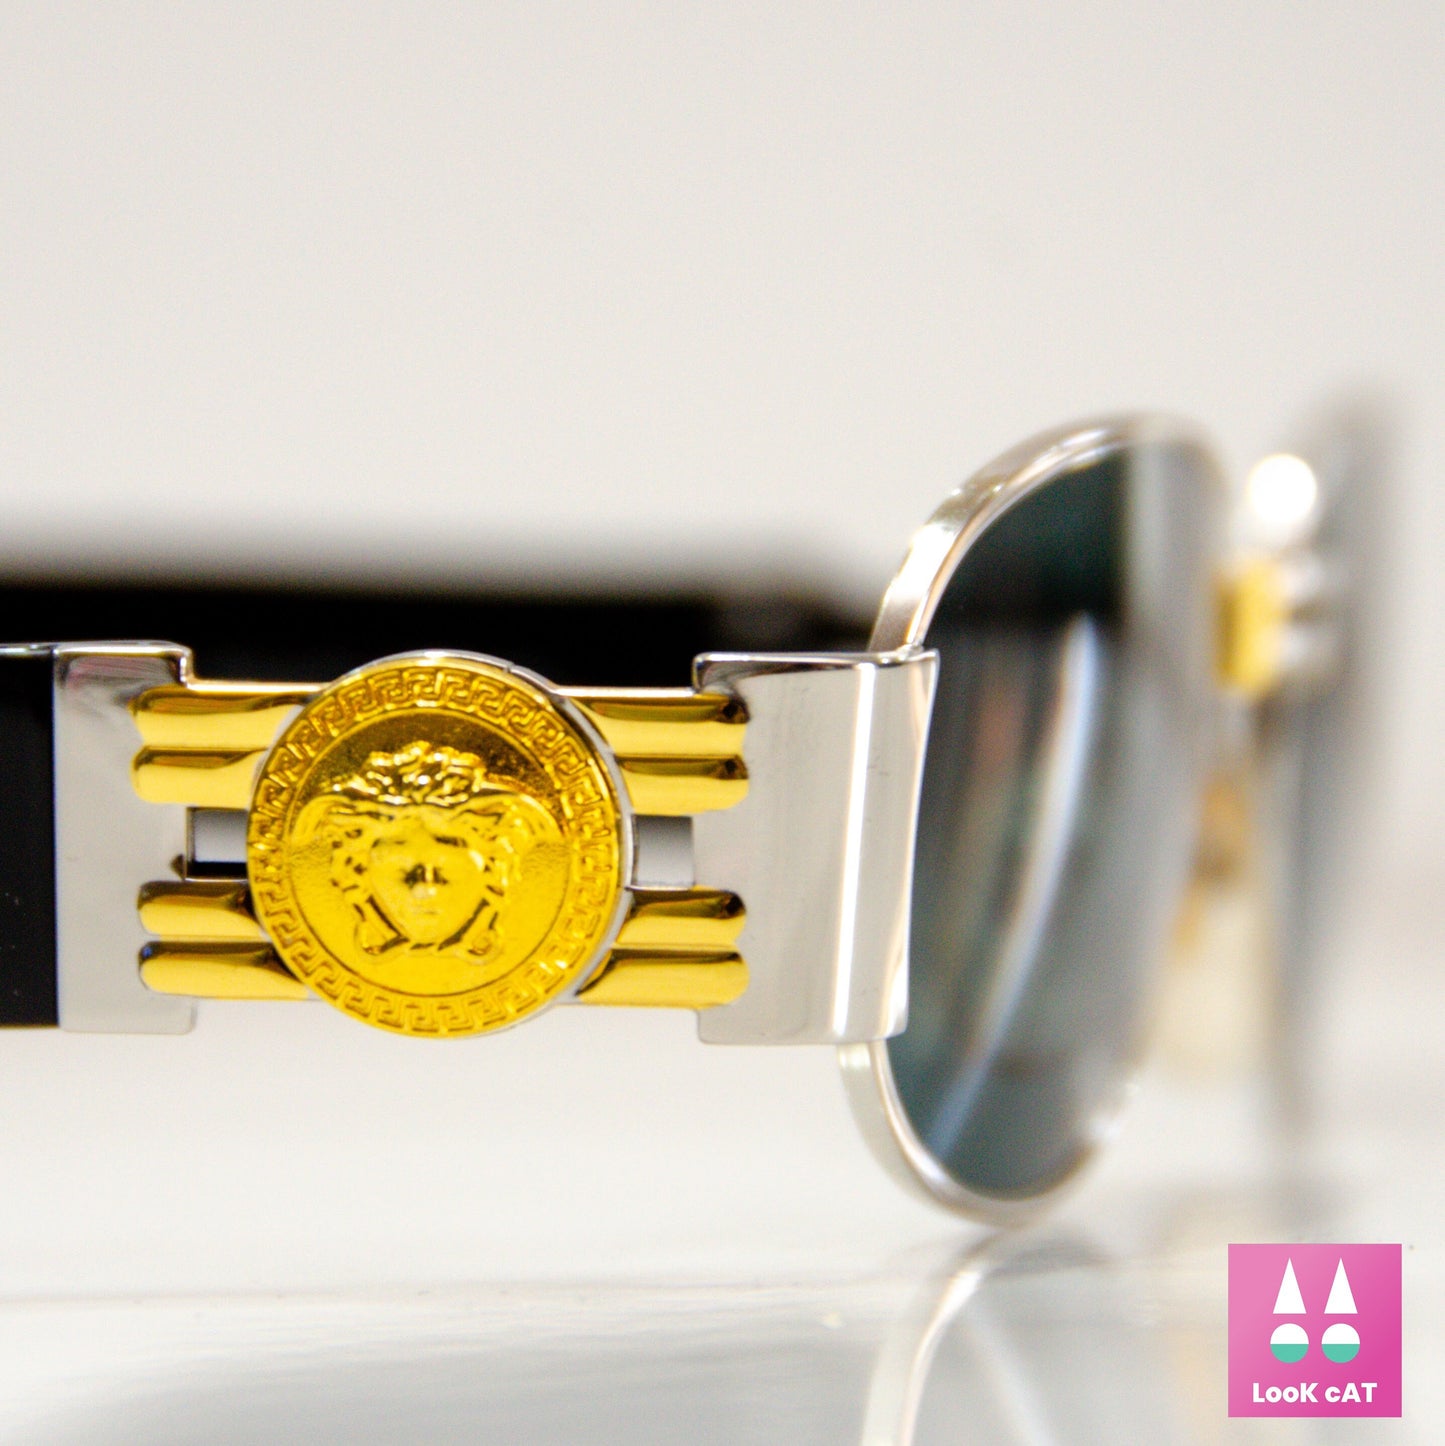 Occhiali da sole vintage Gianni Versace mod S 70 lunetta brille